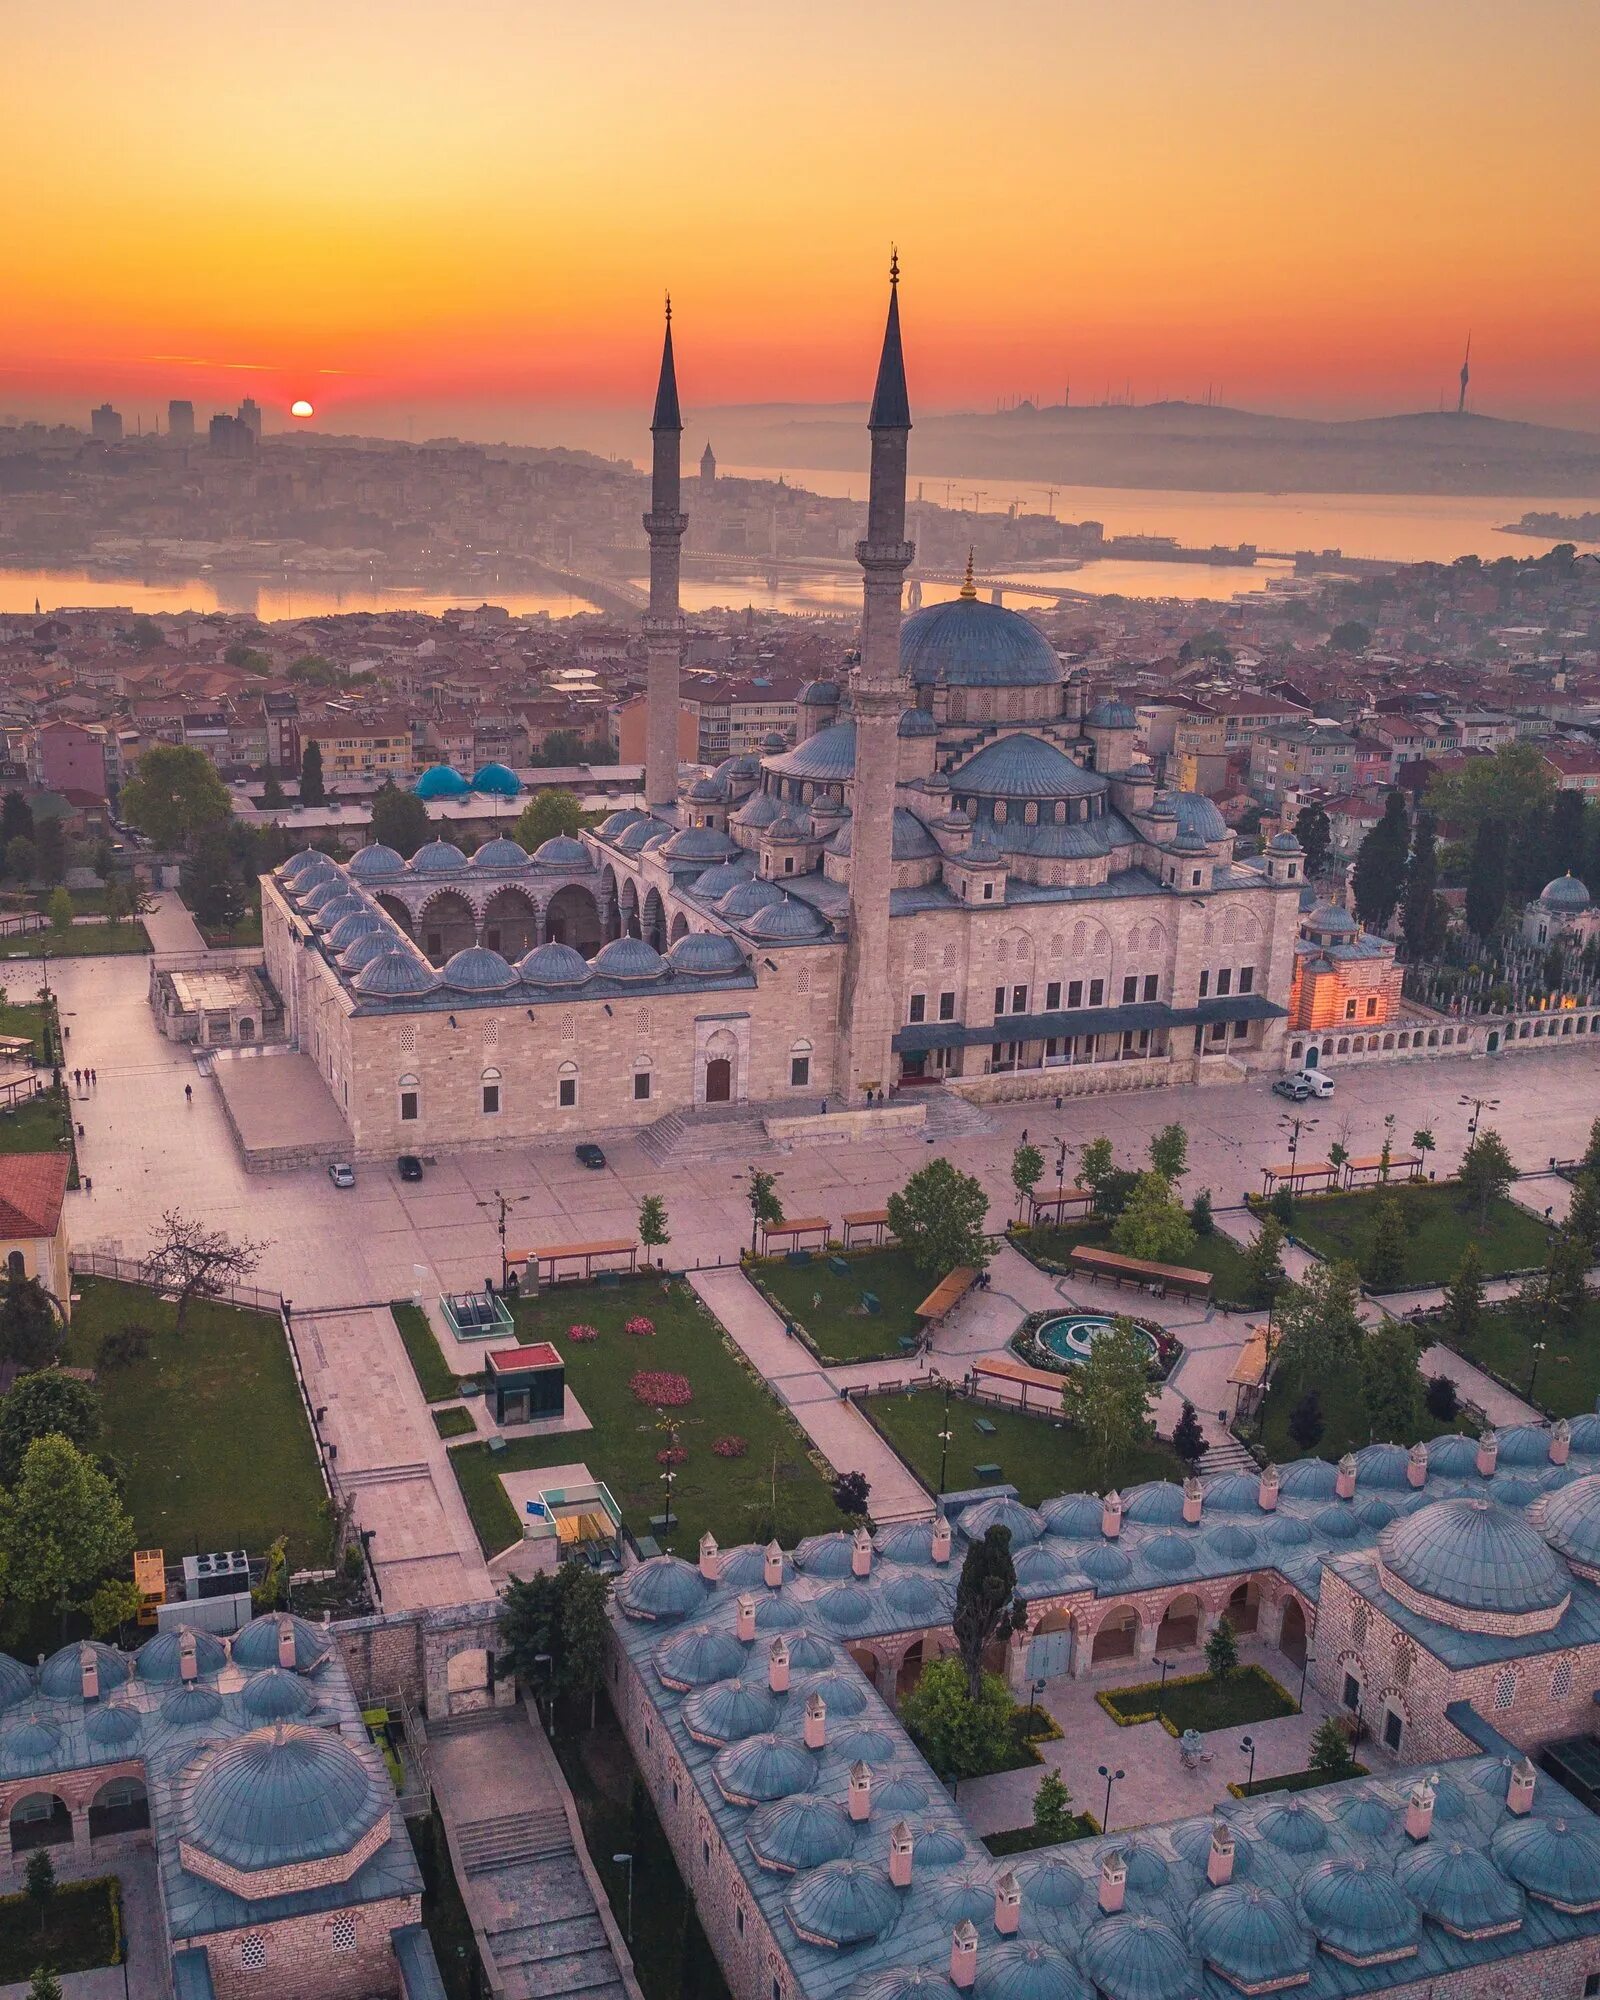 Мечеть фатиха в стамбуле. Фатих Стамбул. Стамбул Фатих Султанахмет. Султанахмет (район Фатих). Турецкие мечети в Стамбуле Фатих.